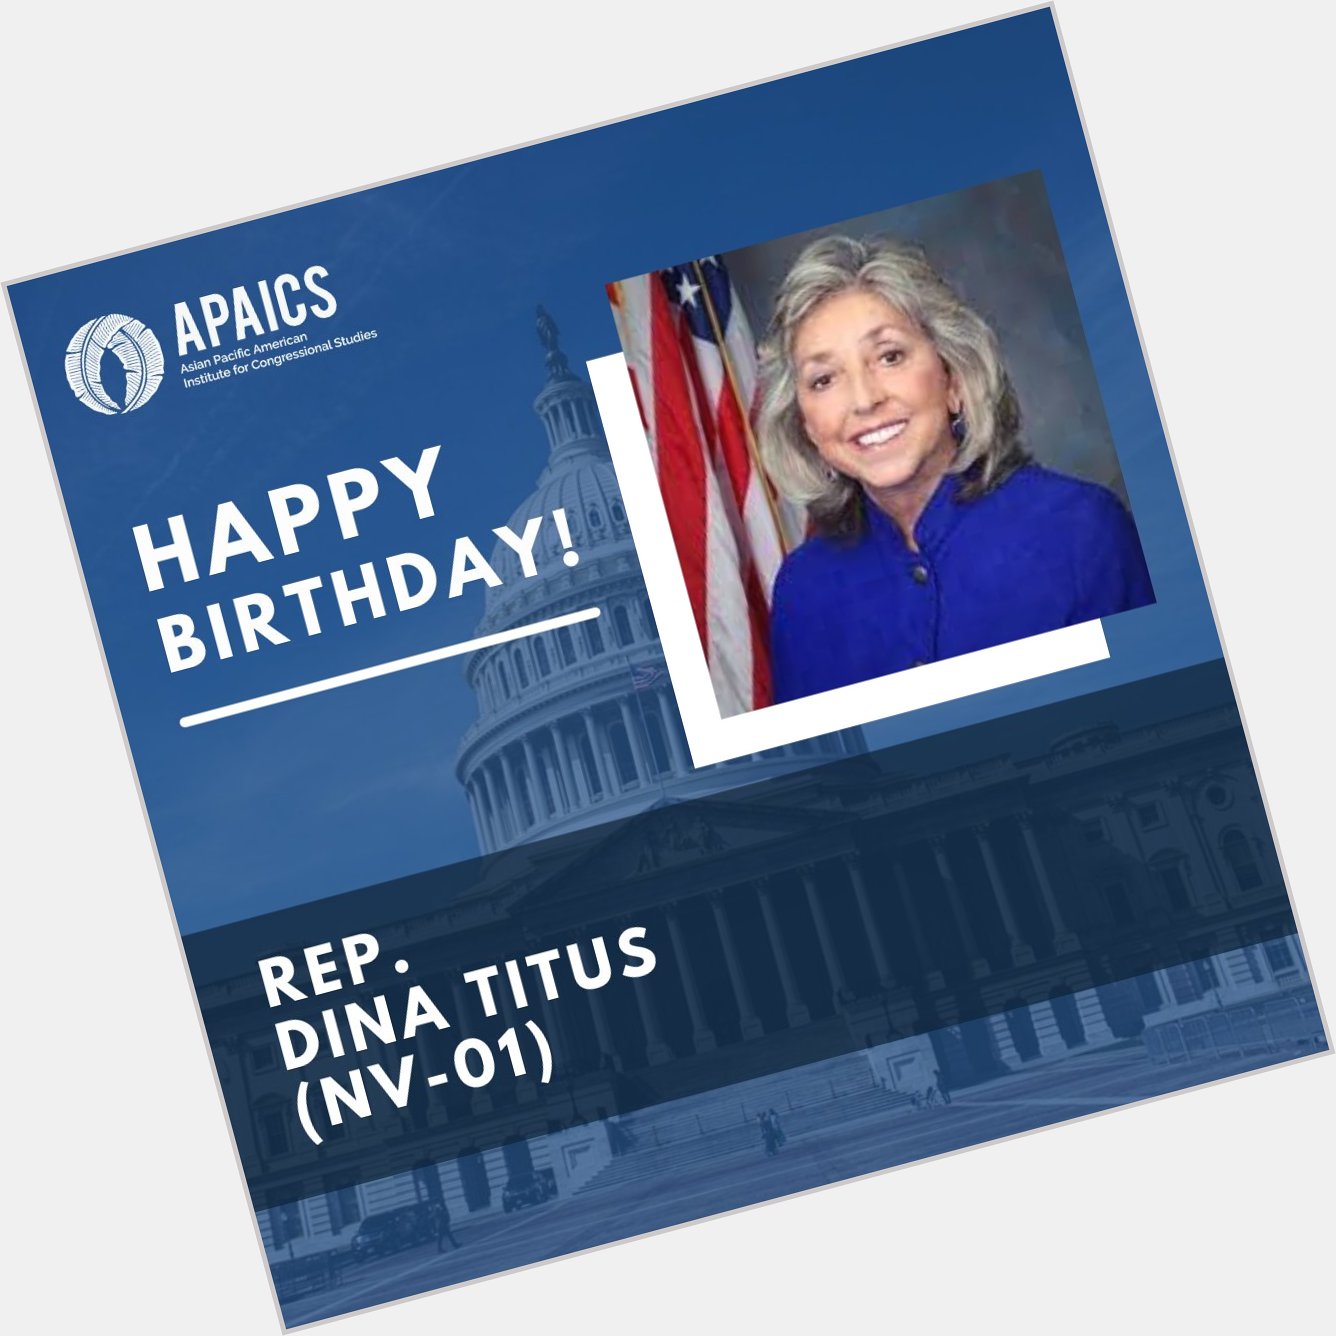 Happy birthday to member Dina Titus 